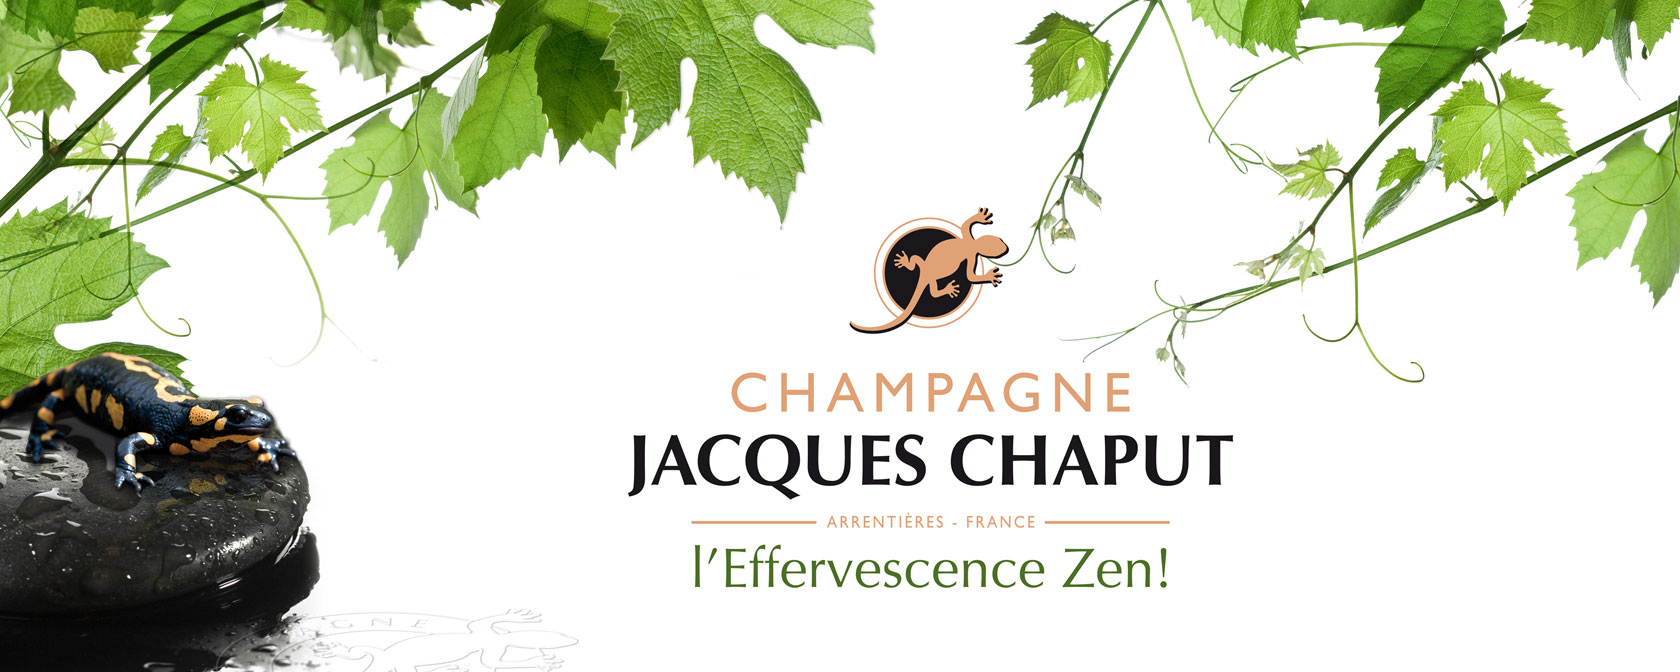 Champagne Jacques Chaput Werbung